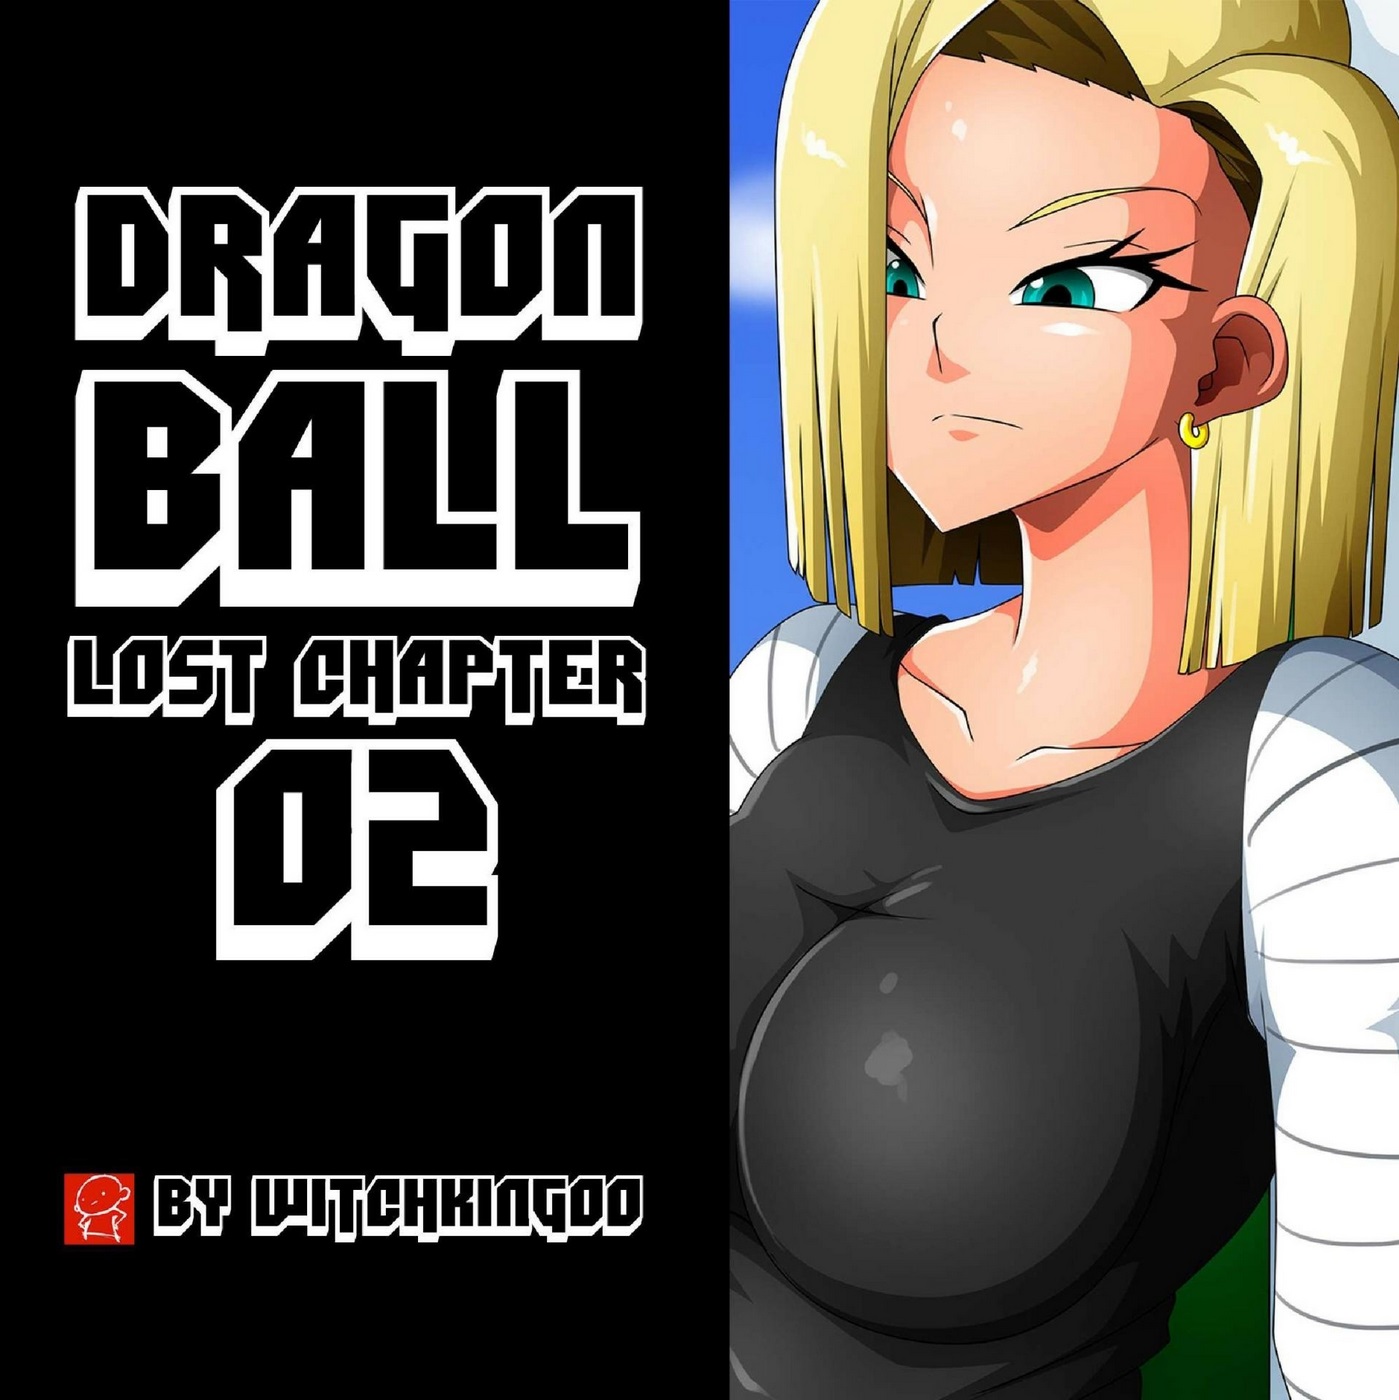 dragonball Perdido capítulo 02 witchking00